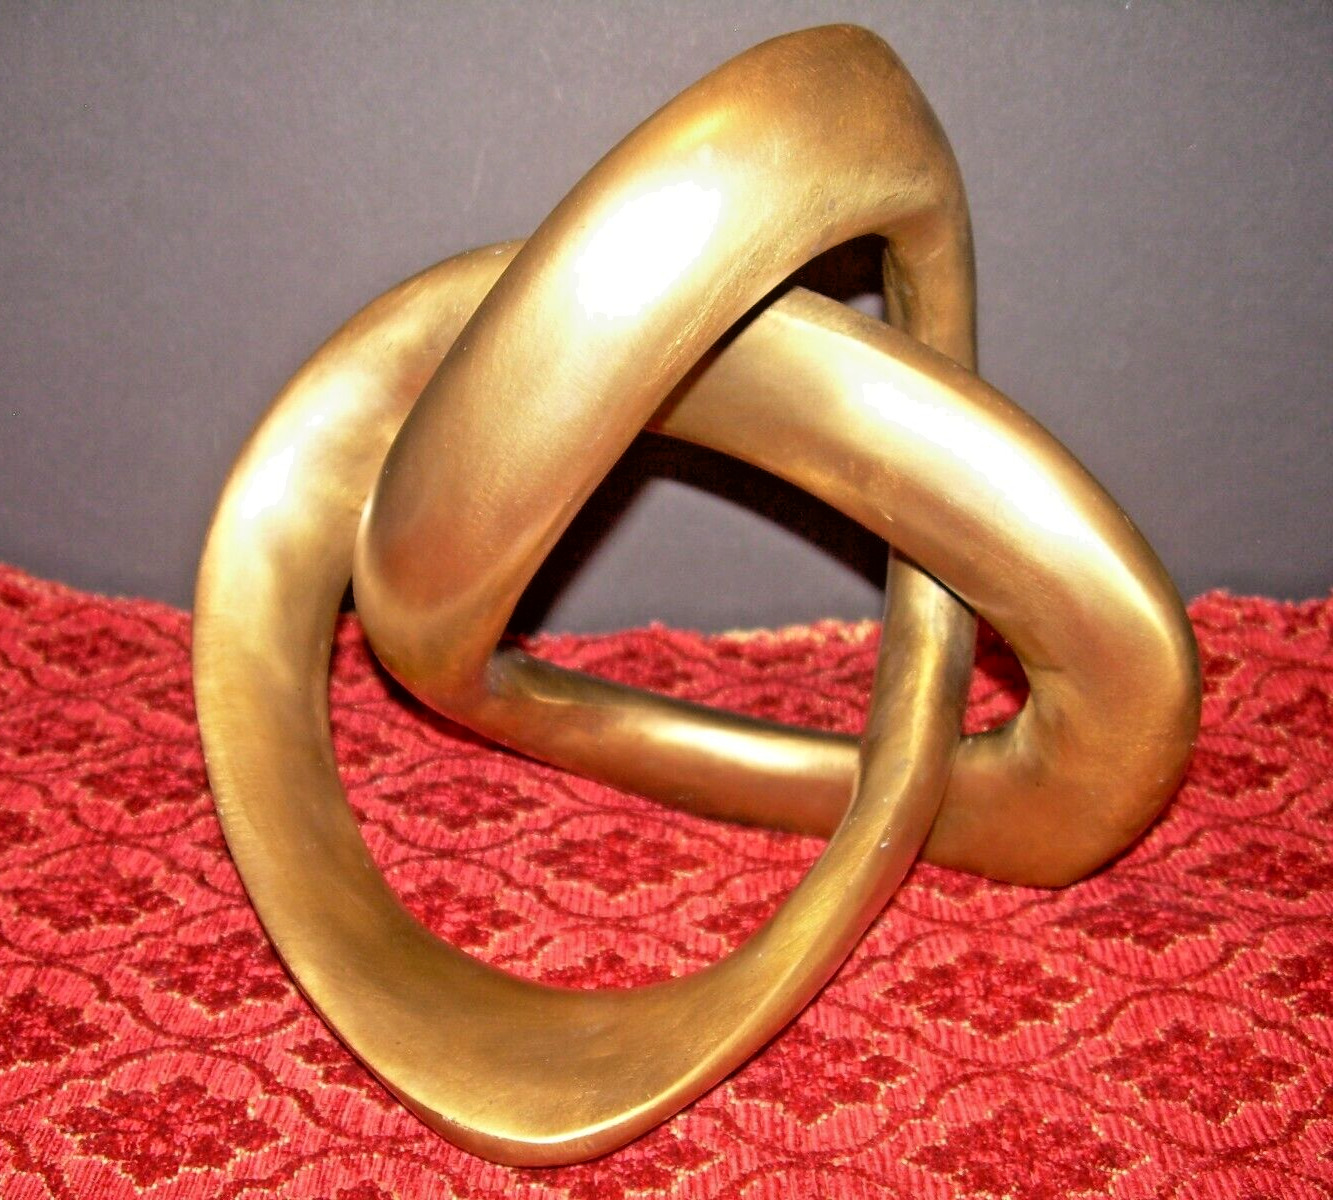 Interlude Home Trefoil Knot Sculpture